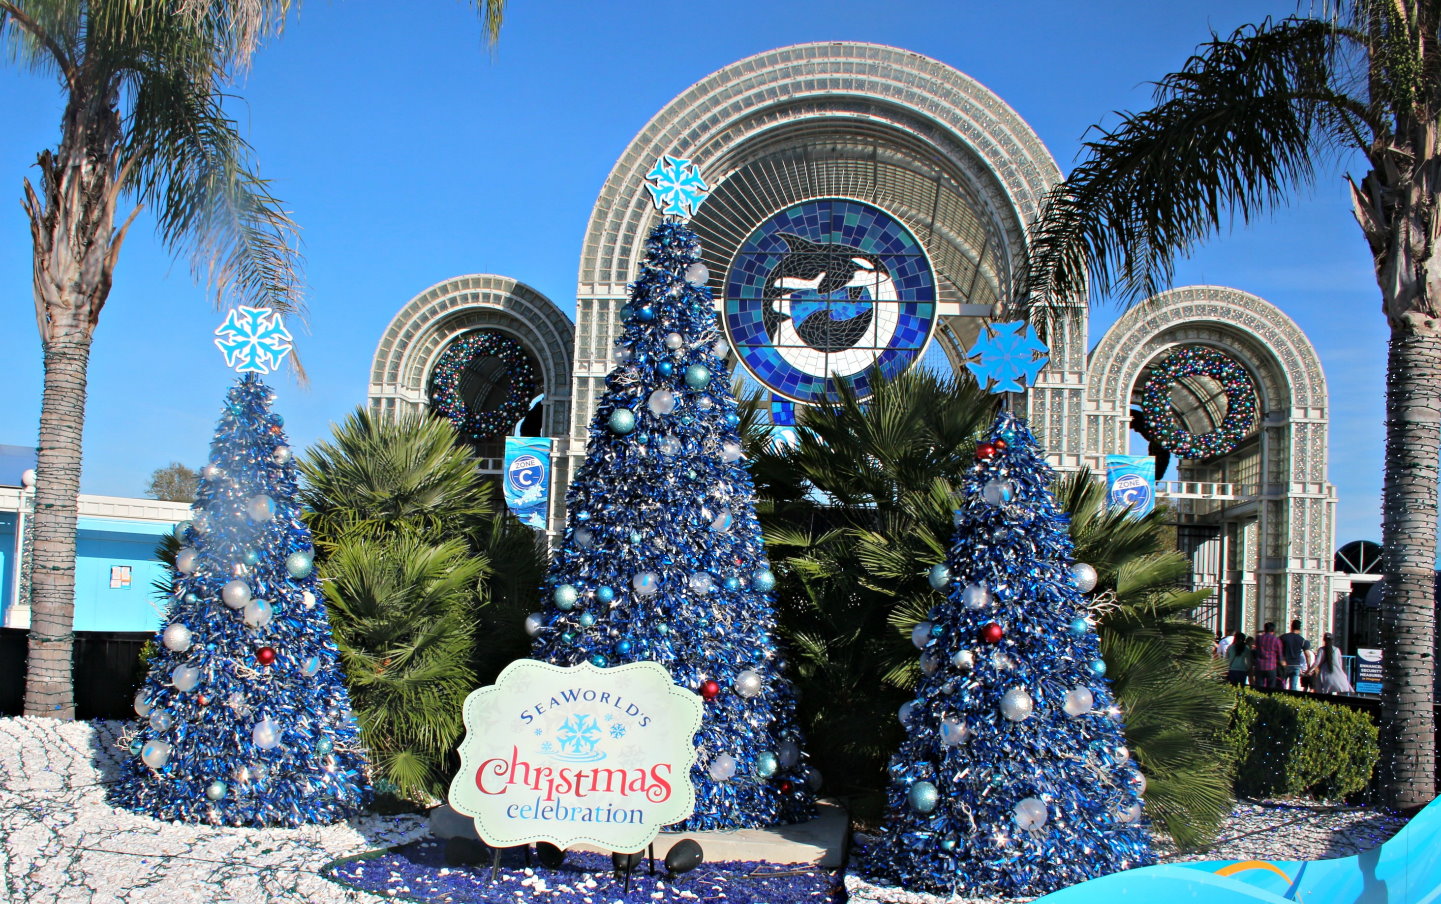 SeaWorld’s Christmas Celebration